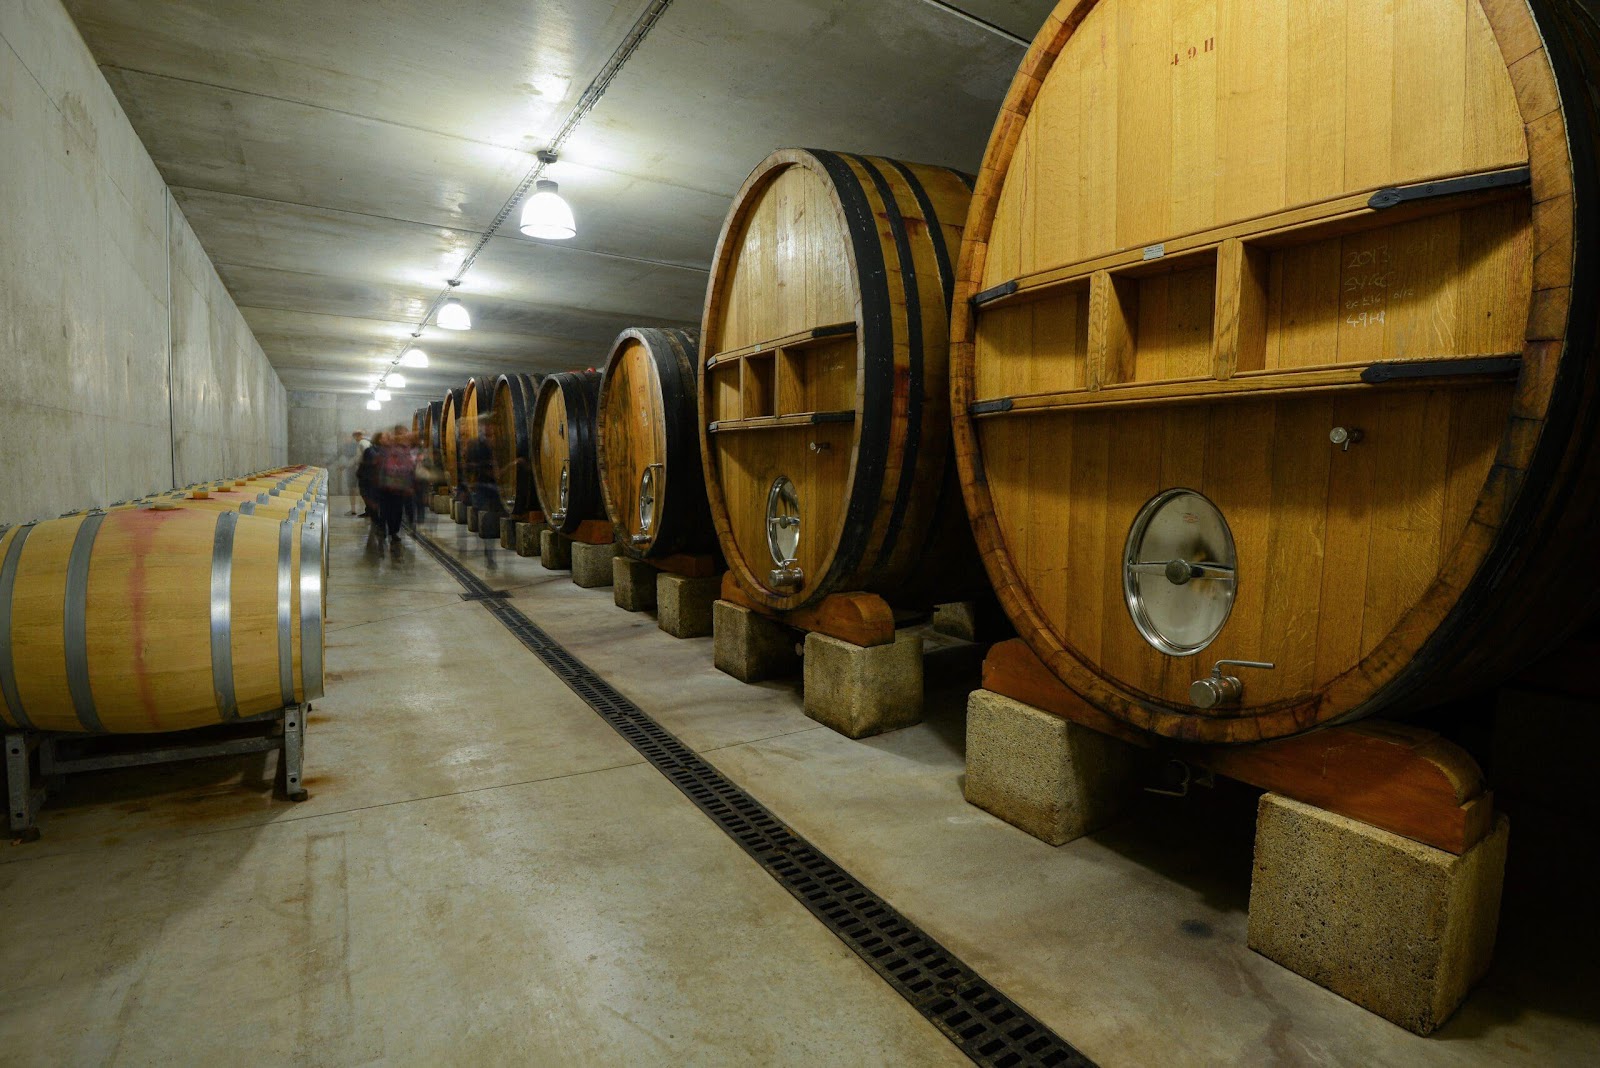 Several barrels in a cellar

Description automatically generated